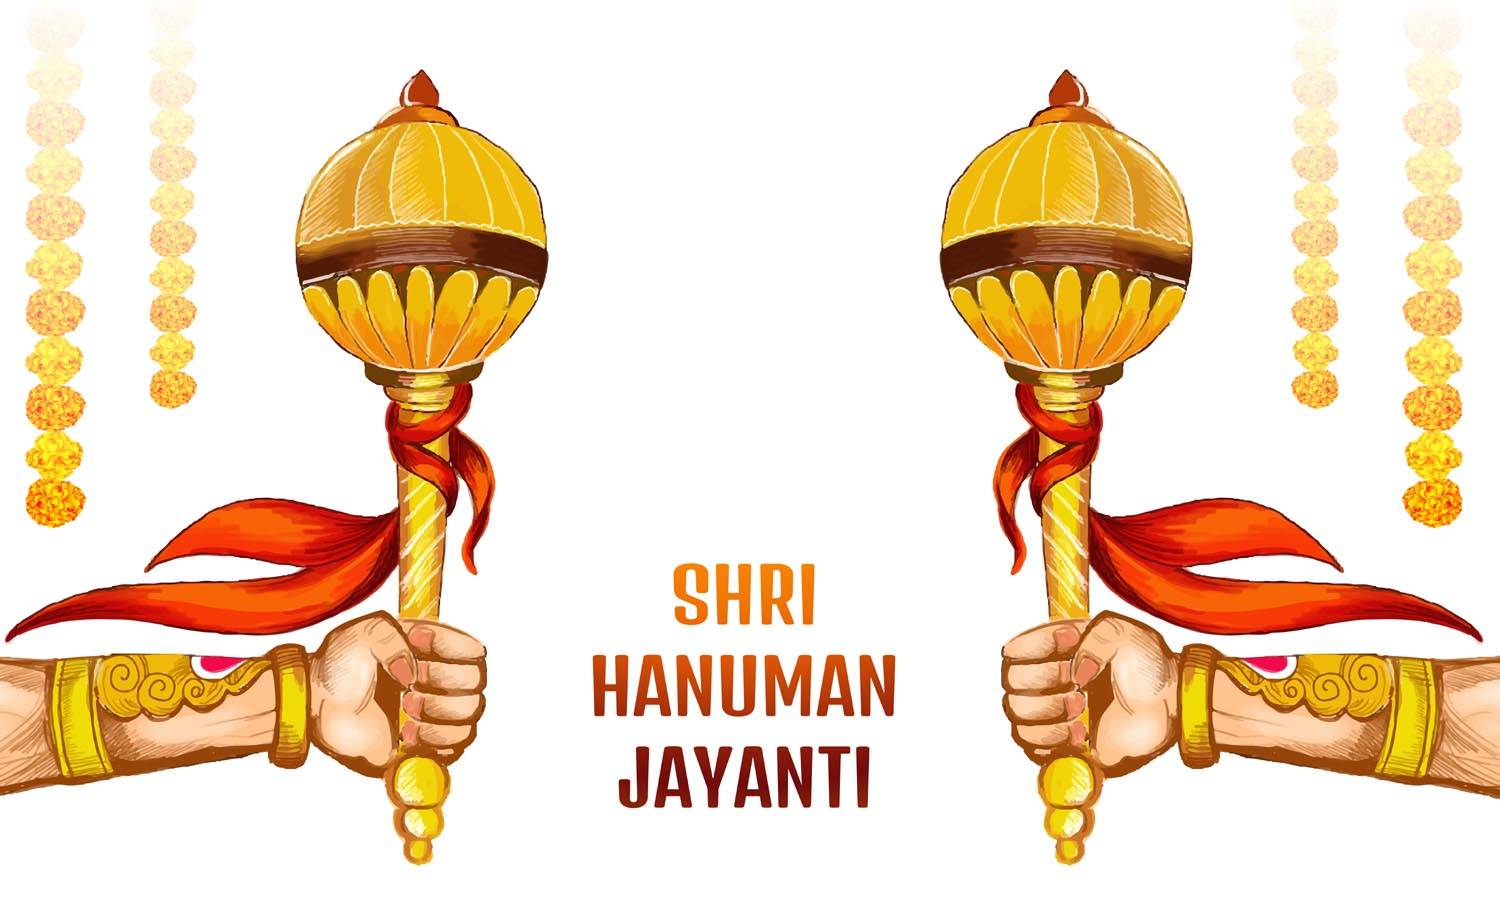 Hanuman Jayanti Pictures, Images, Photos Wishes Messages